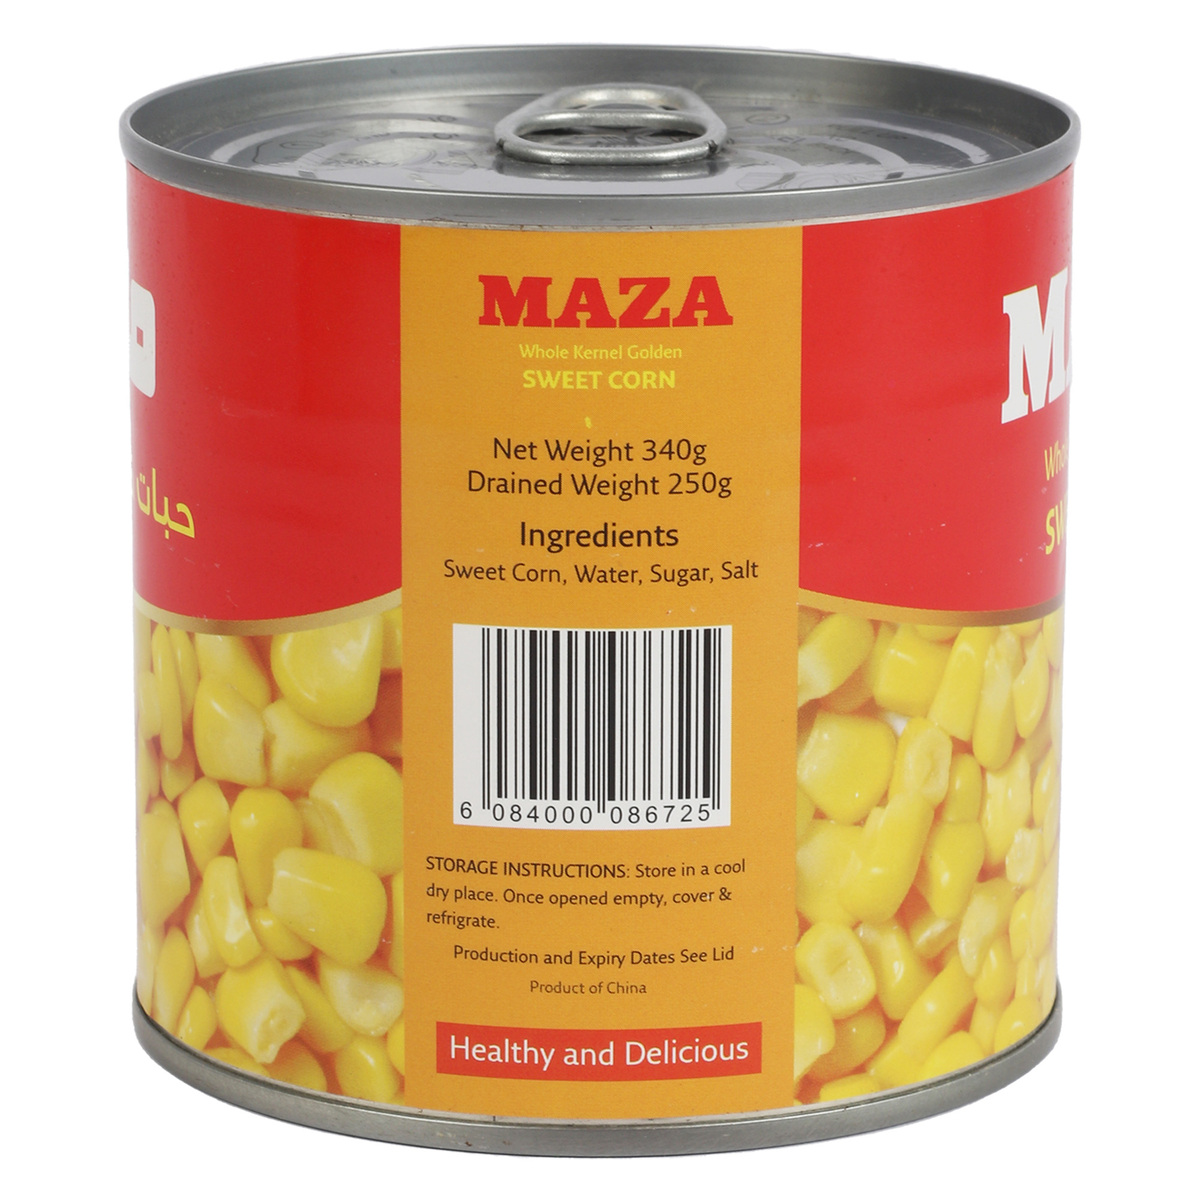 Maza Whole Kernel Golden Sweet Corn Value Pack 6 x 340 g